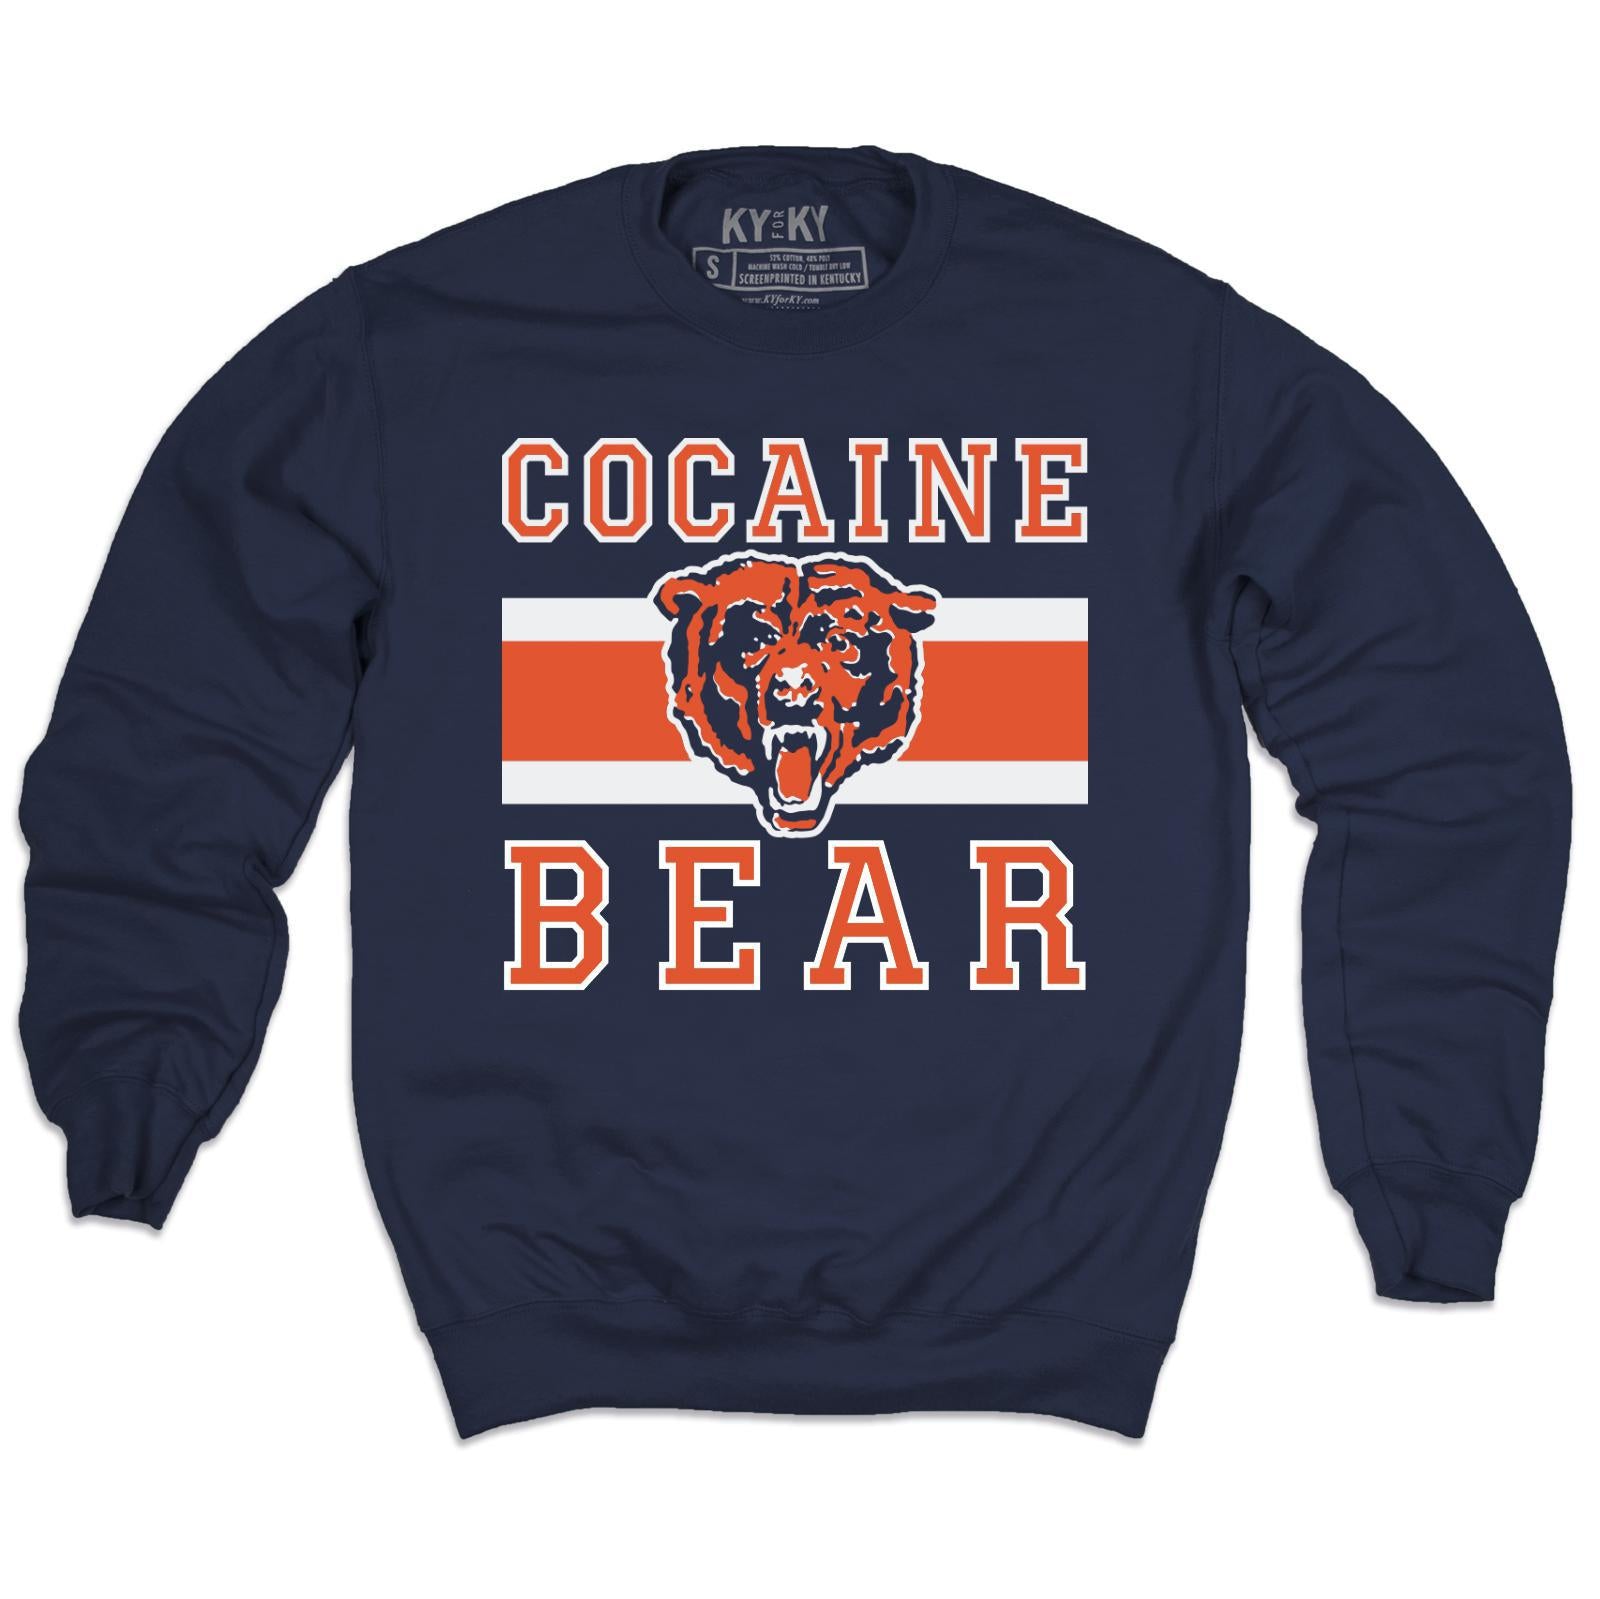 Cocaine Bear Vintage Sweatshirt 3XL